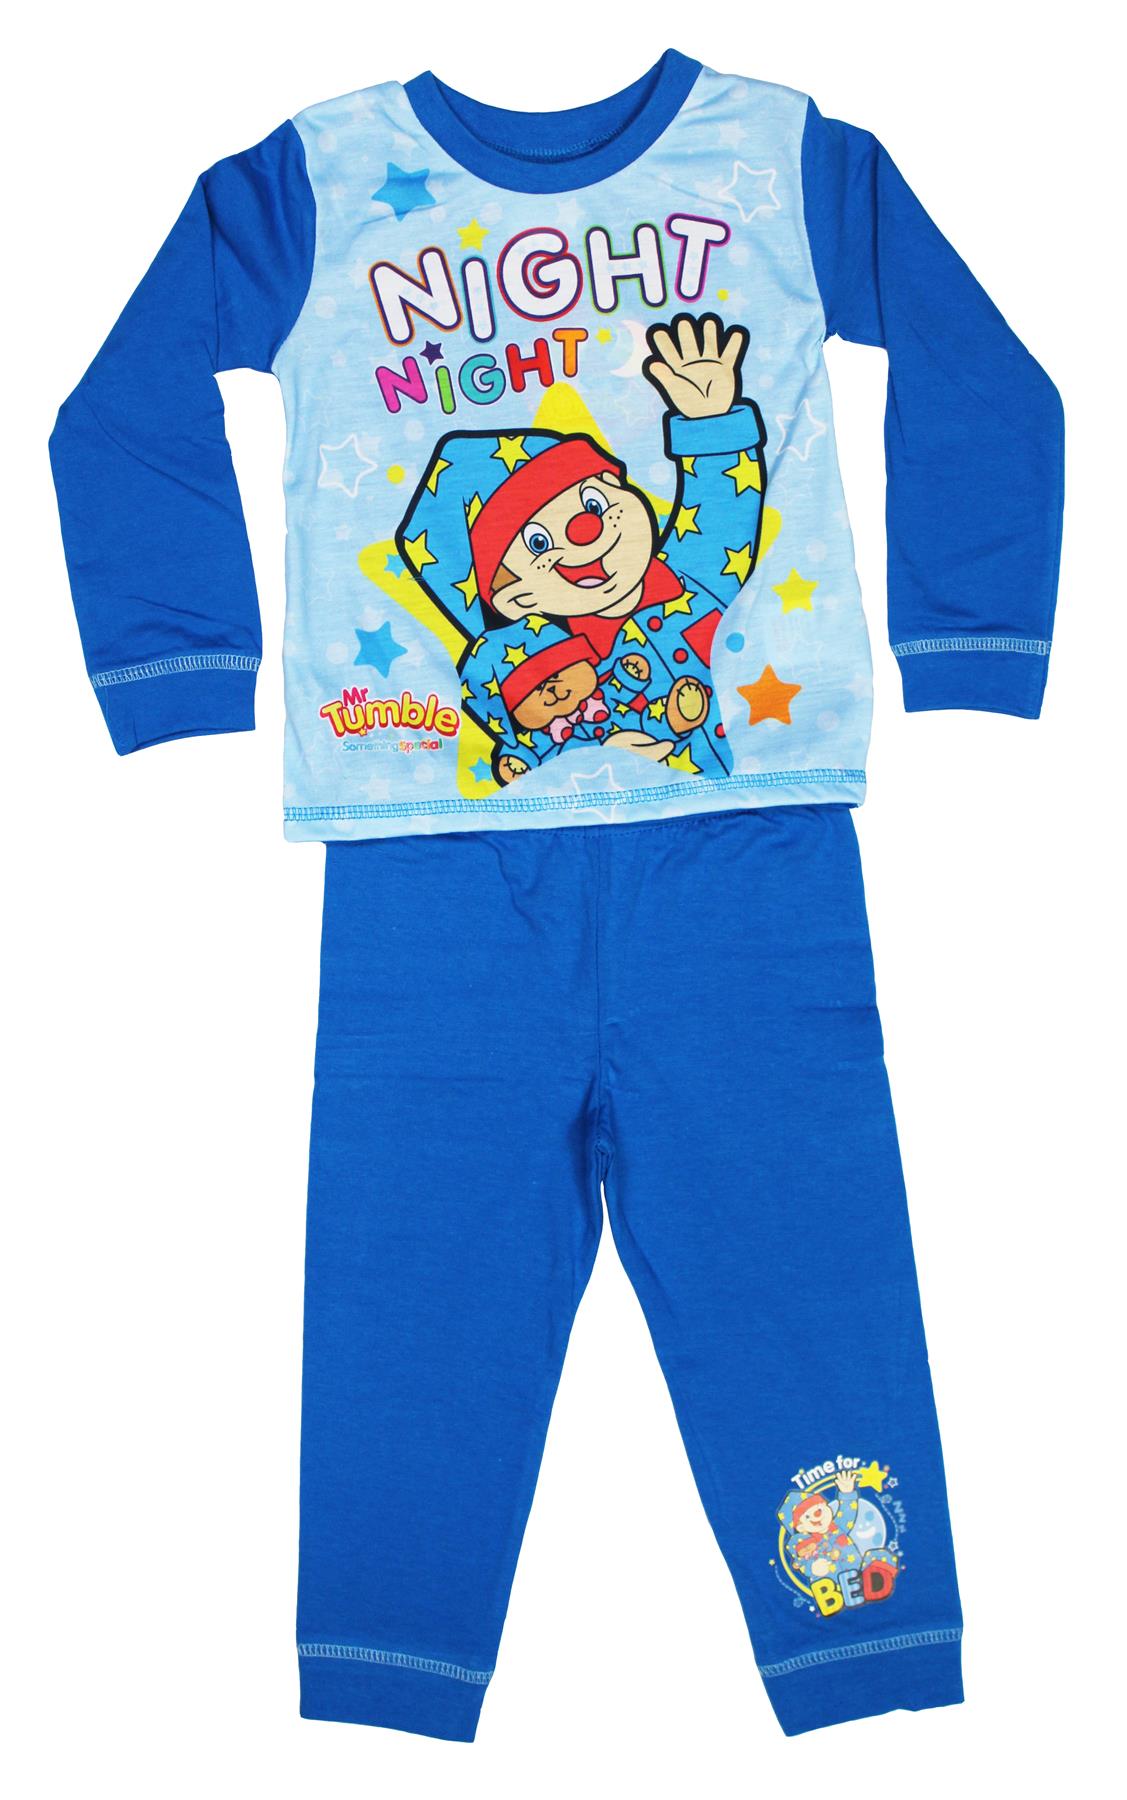 Mr Tumble Night Boys Nightwear Pyjama Set